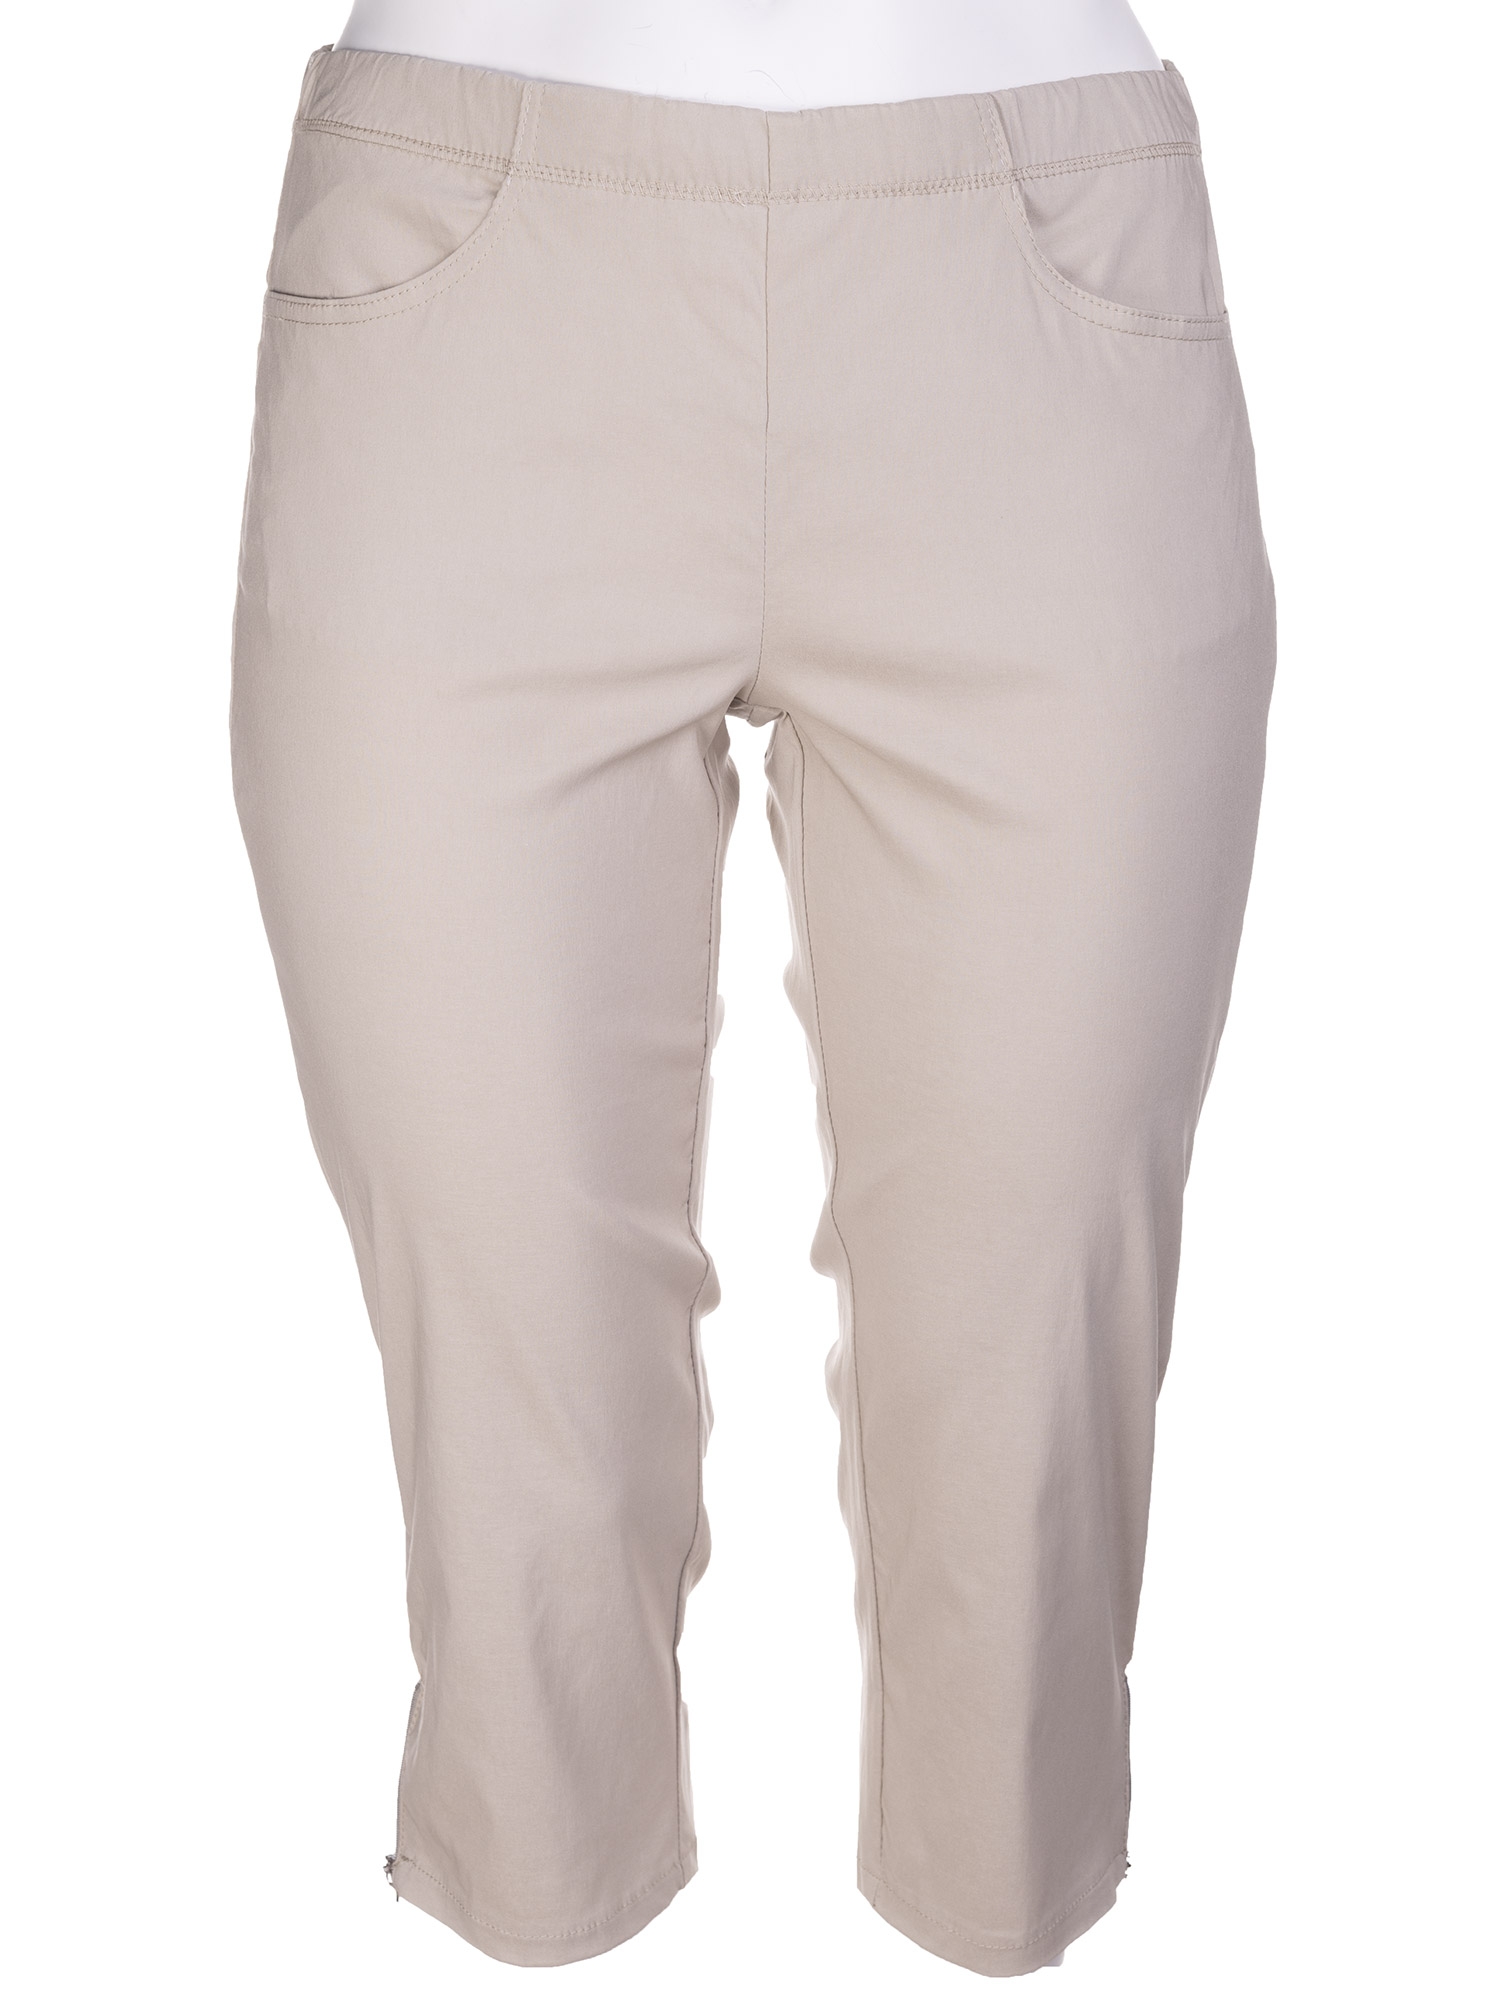 JAZZY - Sand farvede capri bukser med lyslås detalje fra Zhenzi